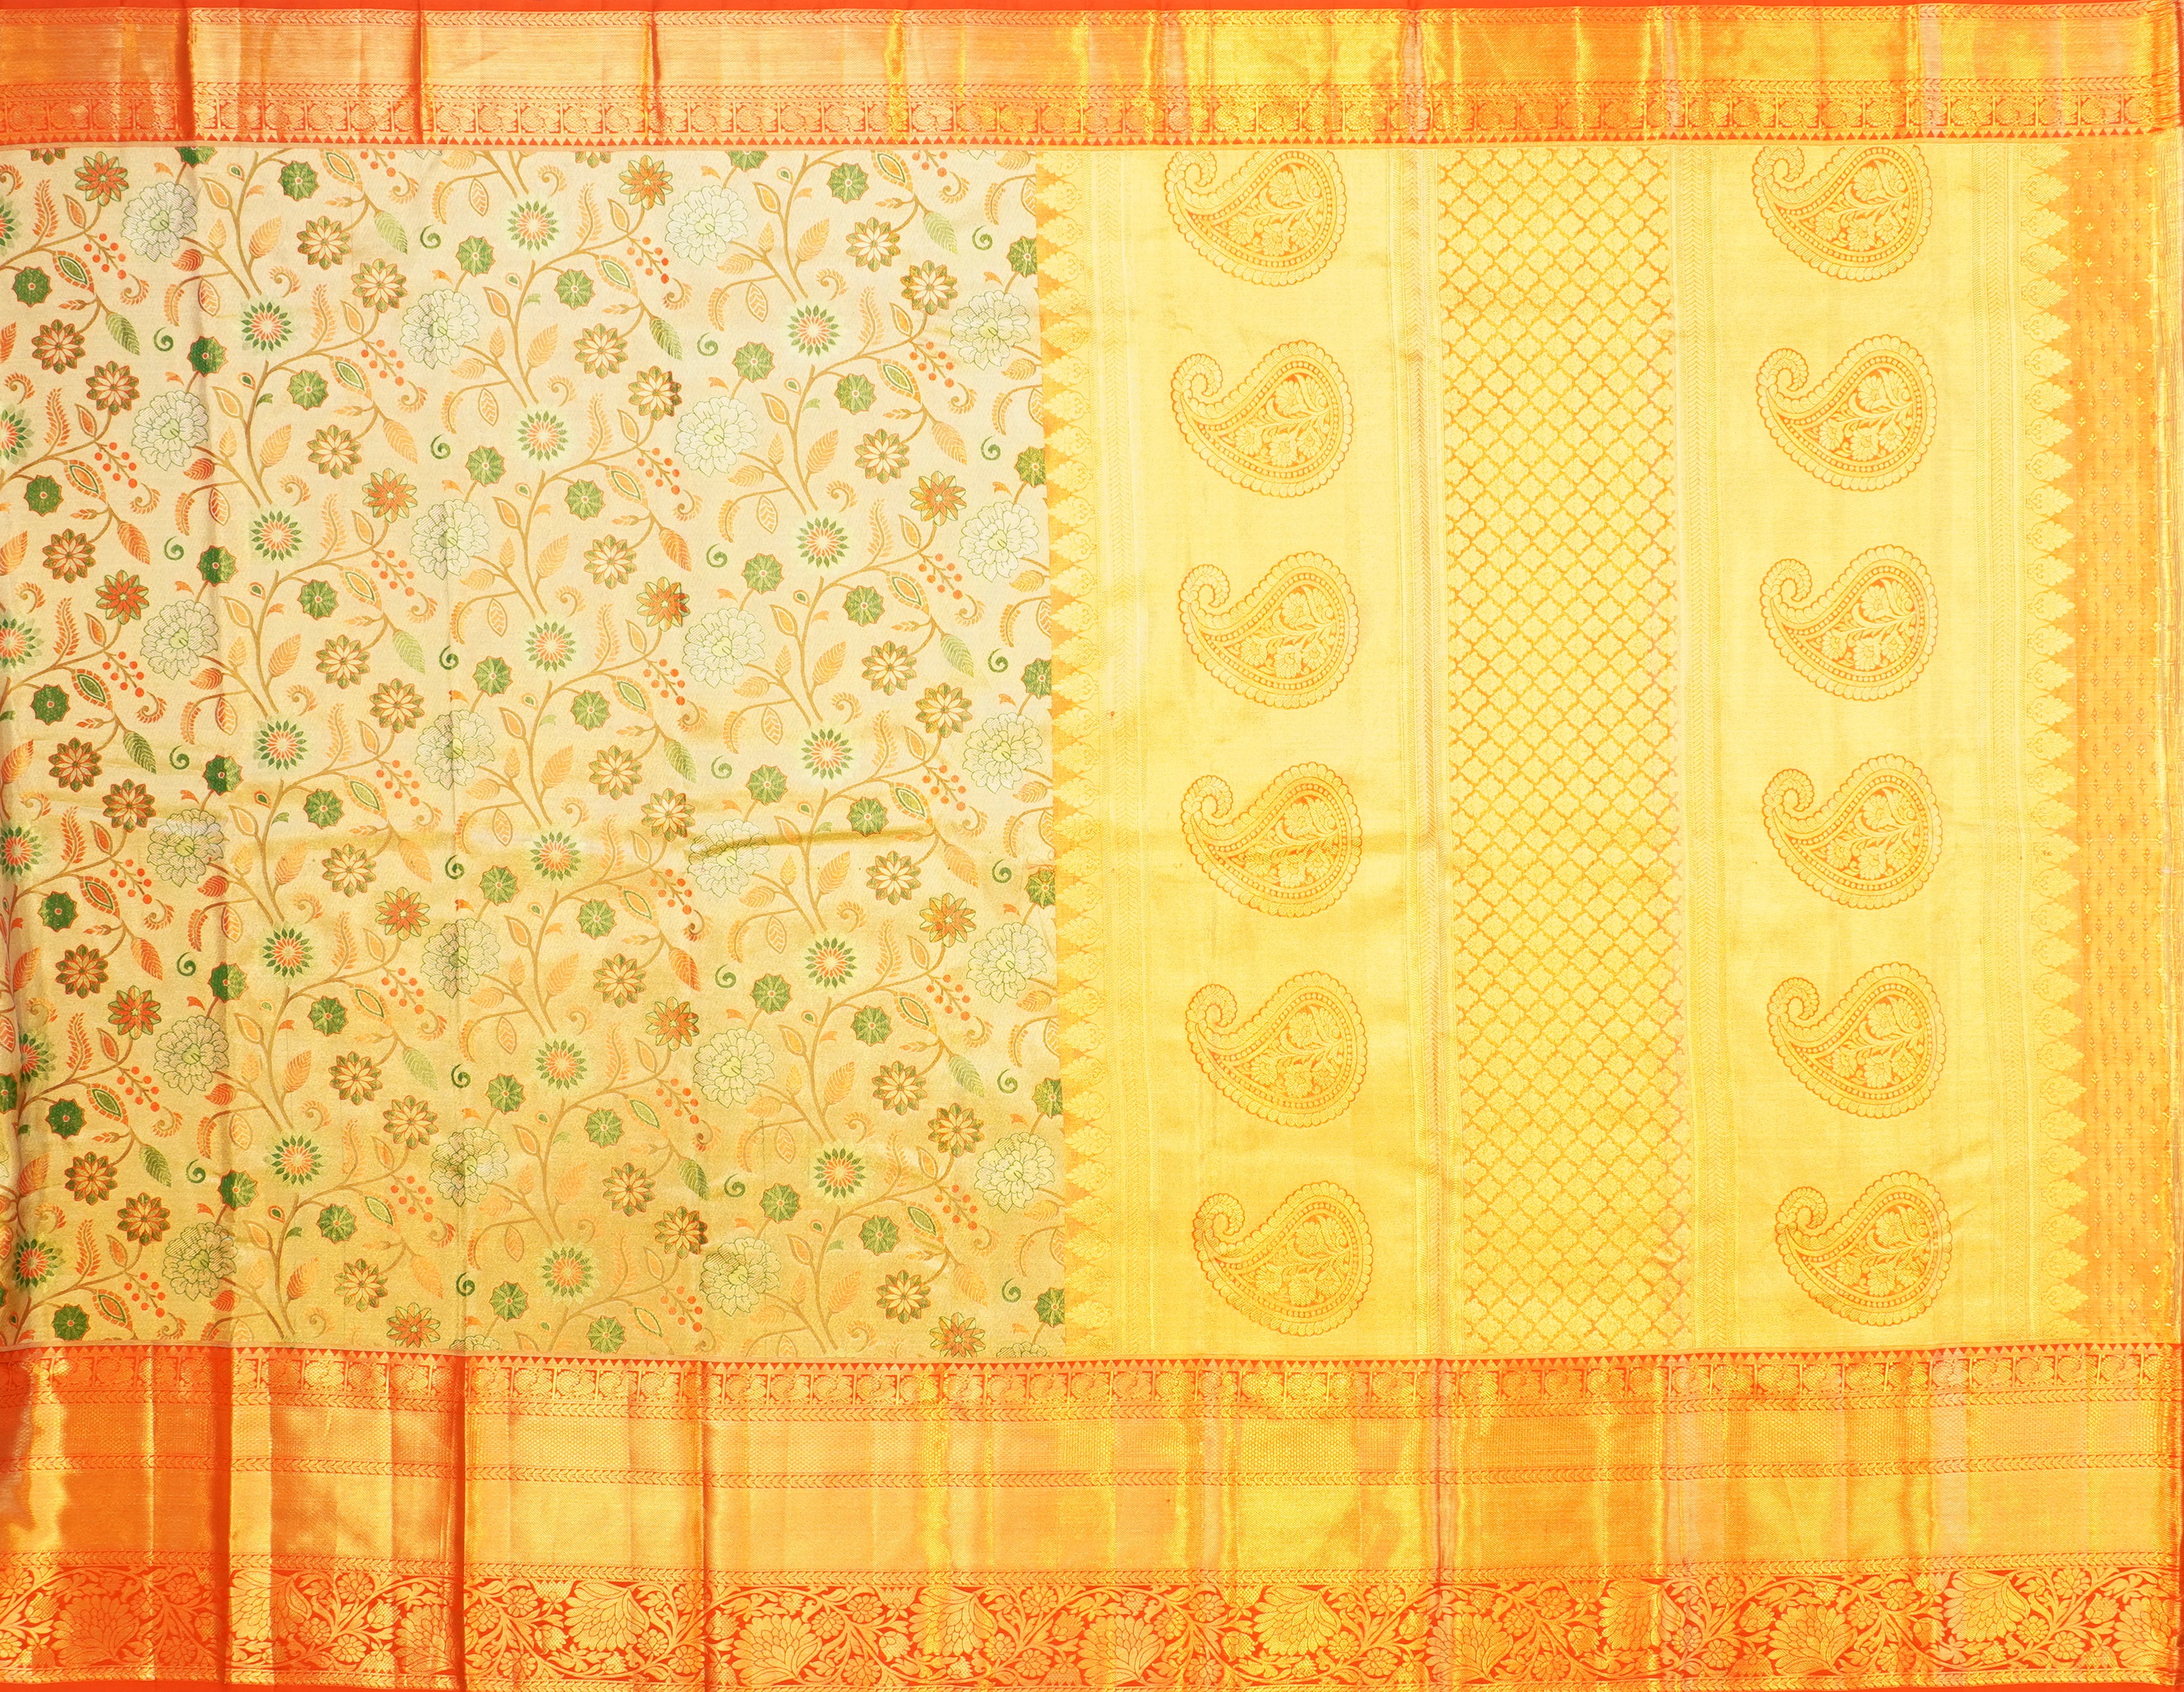 JSB- 9041 | Gold & Red Pure Kanchi Tissue Pattu Saree